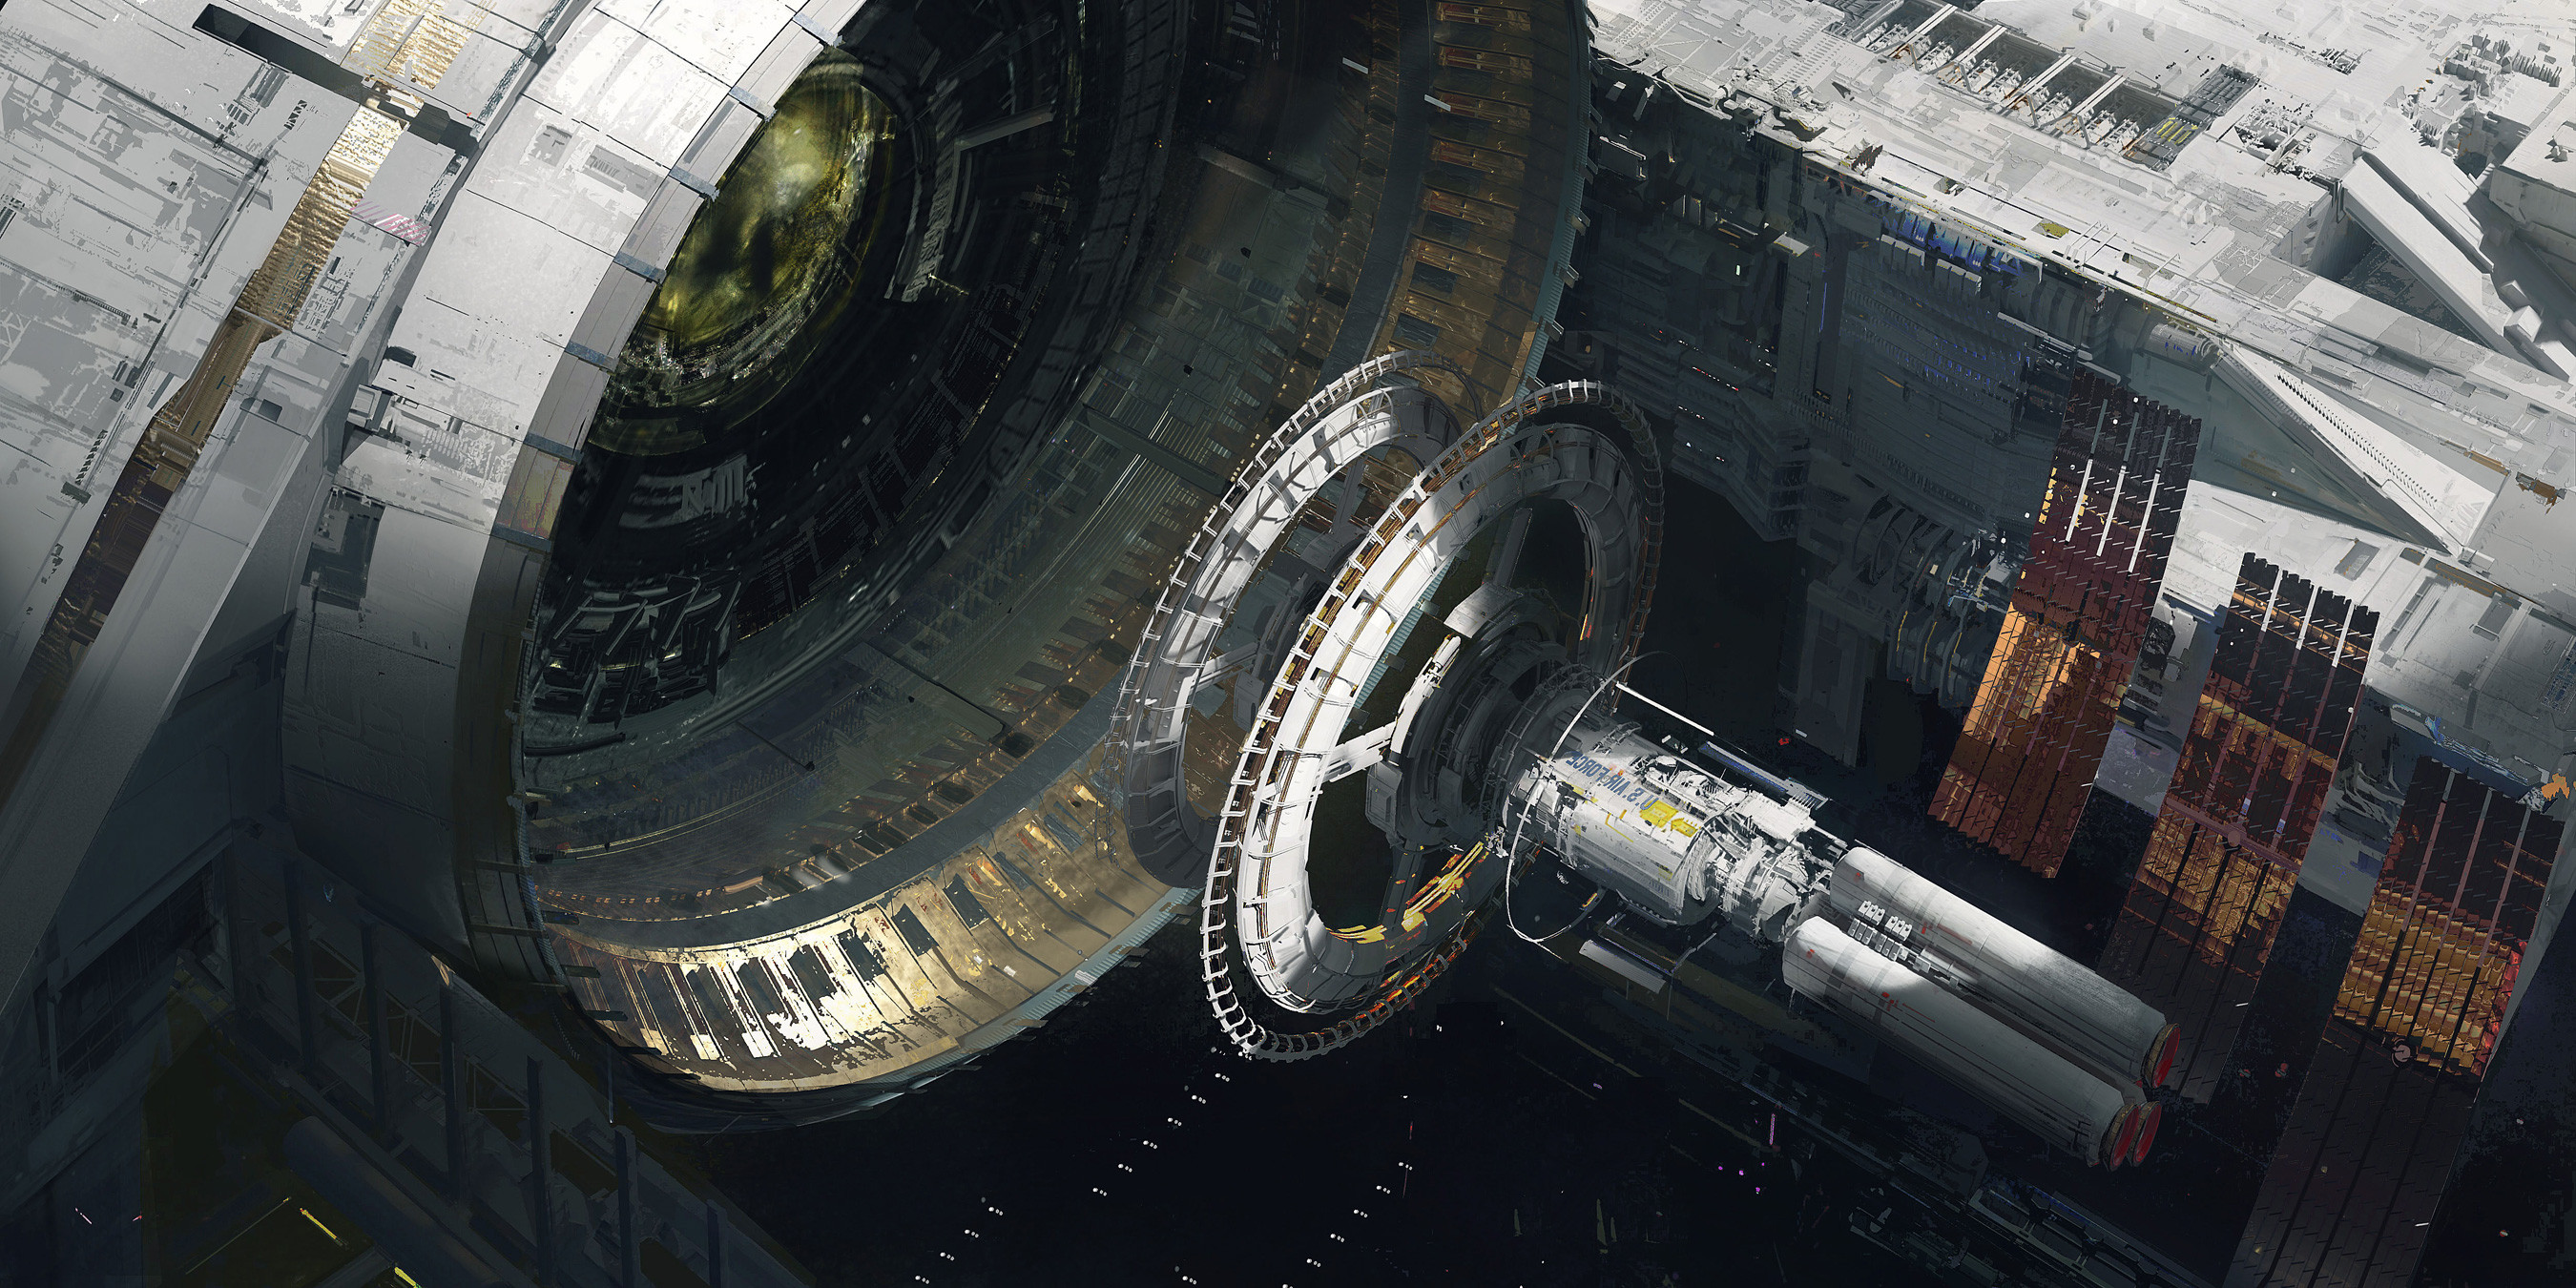 General 2700x1350 digital art artwork illustration space structure spaceship science fiction technology futuristic